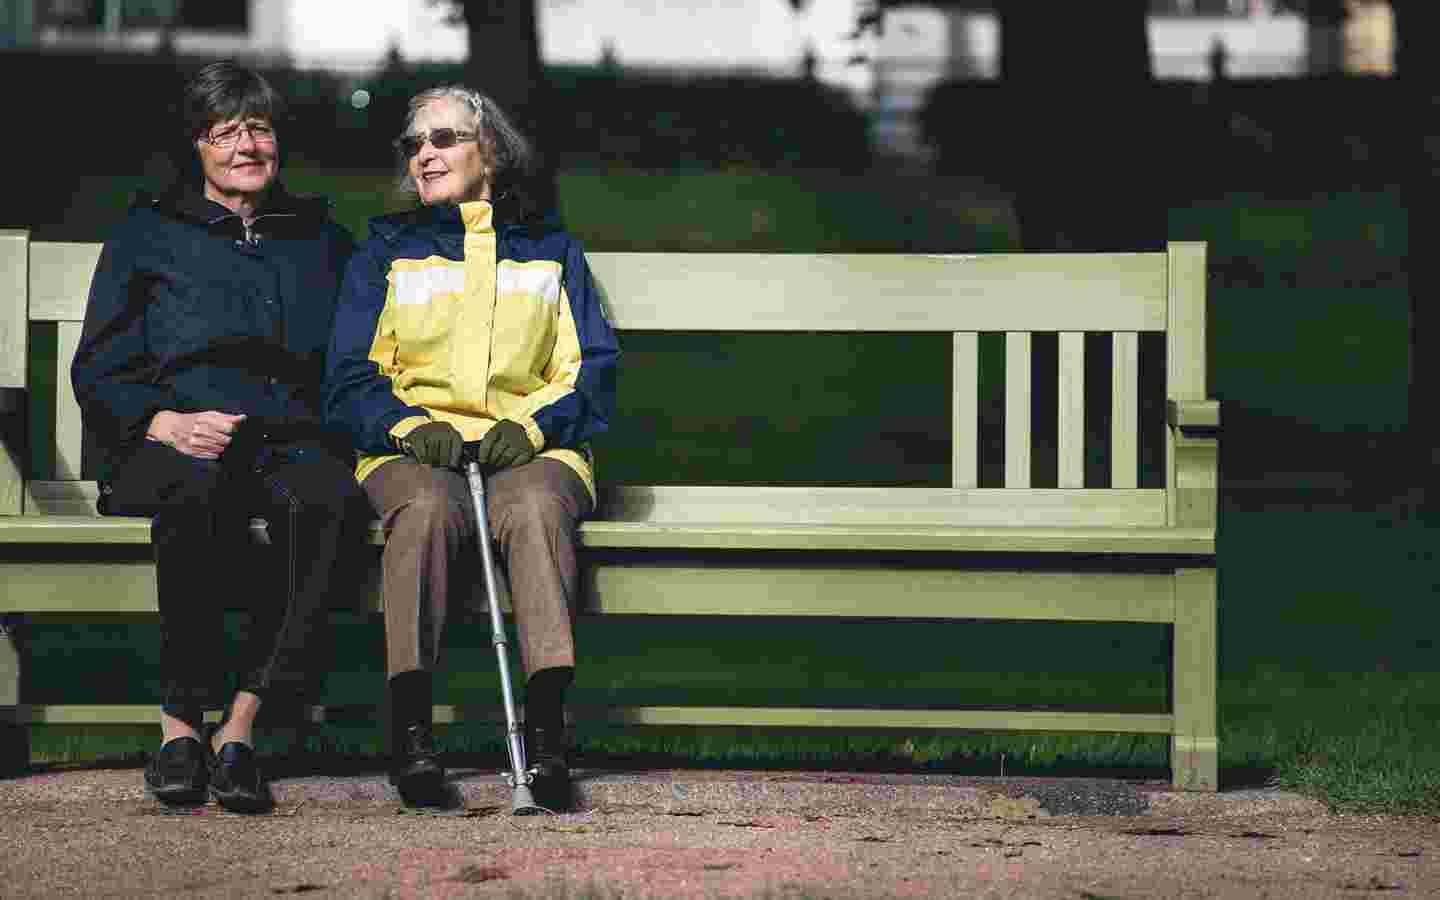 Two elderly women sitting side by side on a park bench.